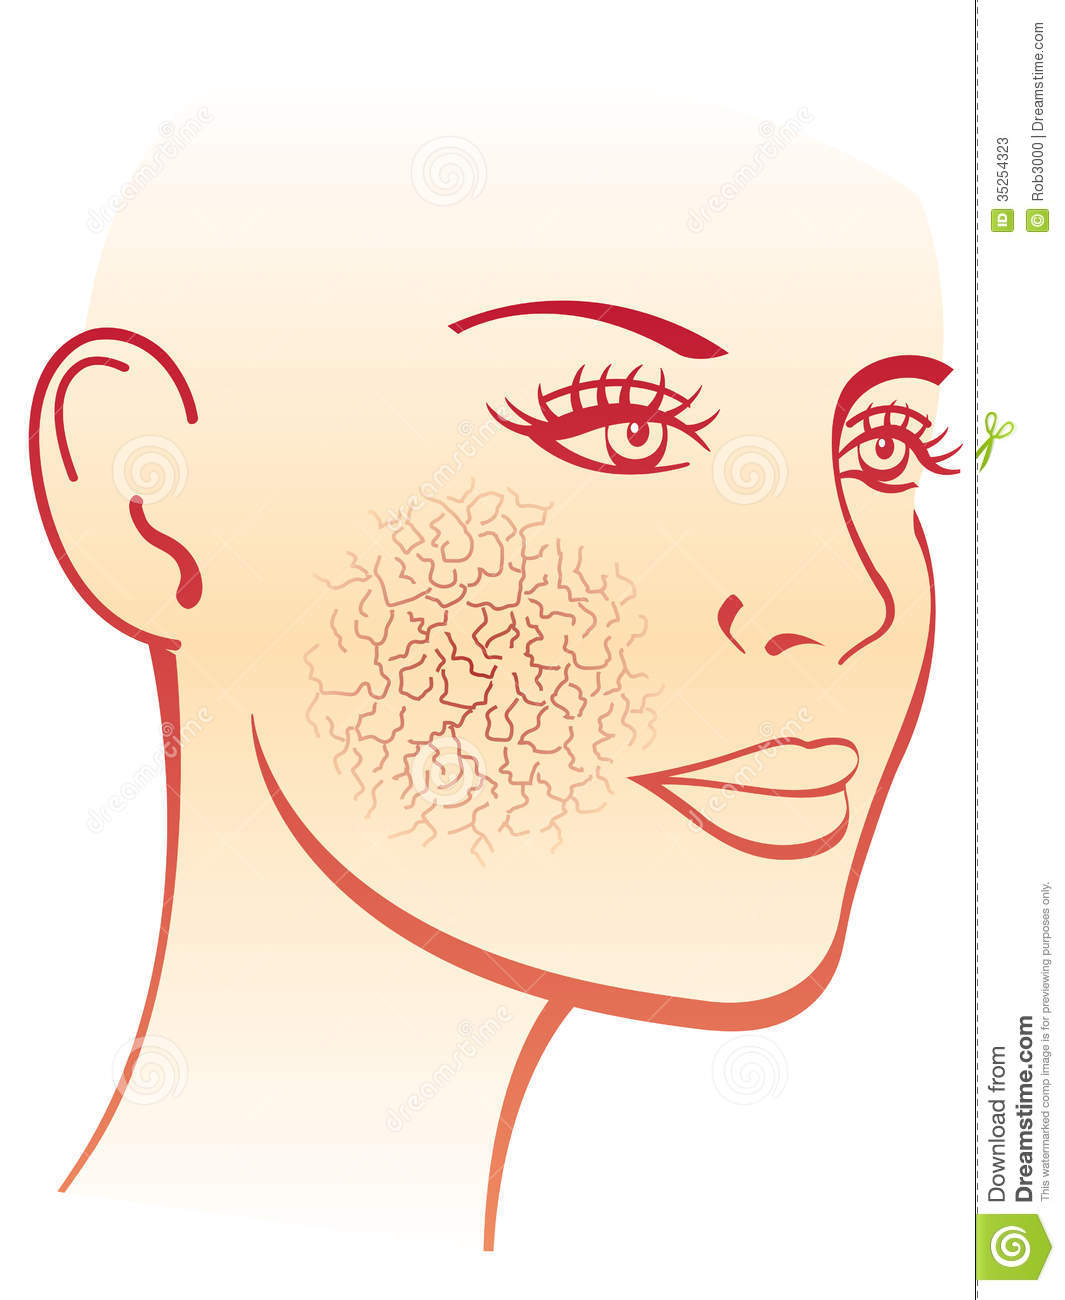 Simbolic Medical Illustration Of The Effects Of Dry Skin